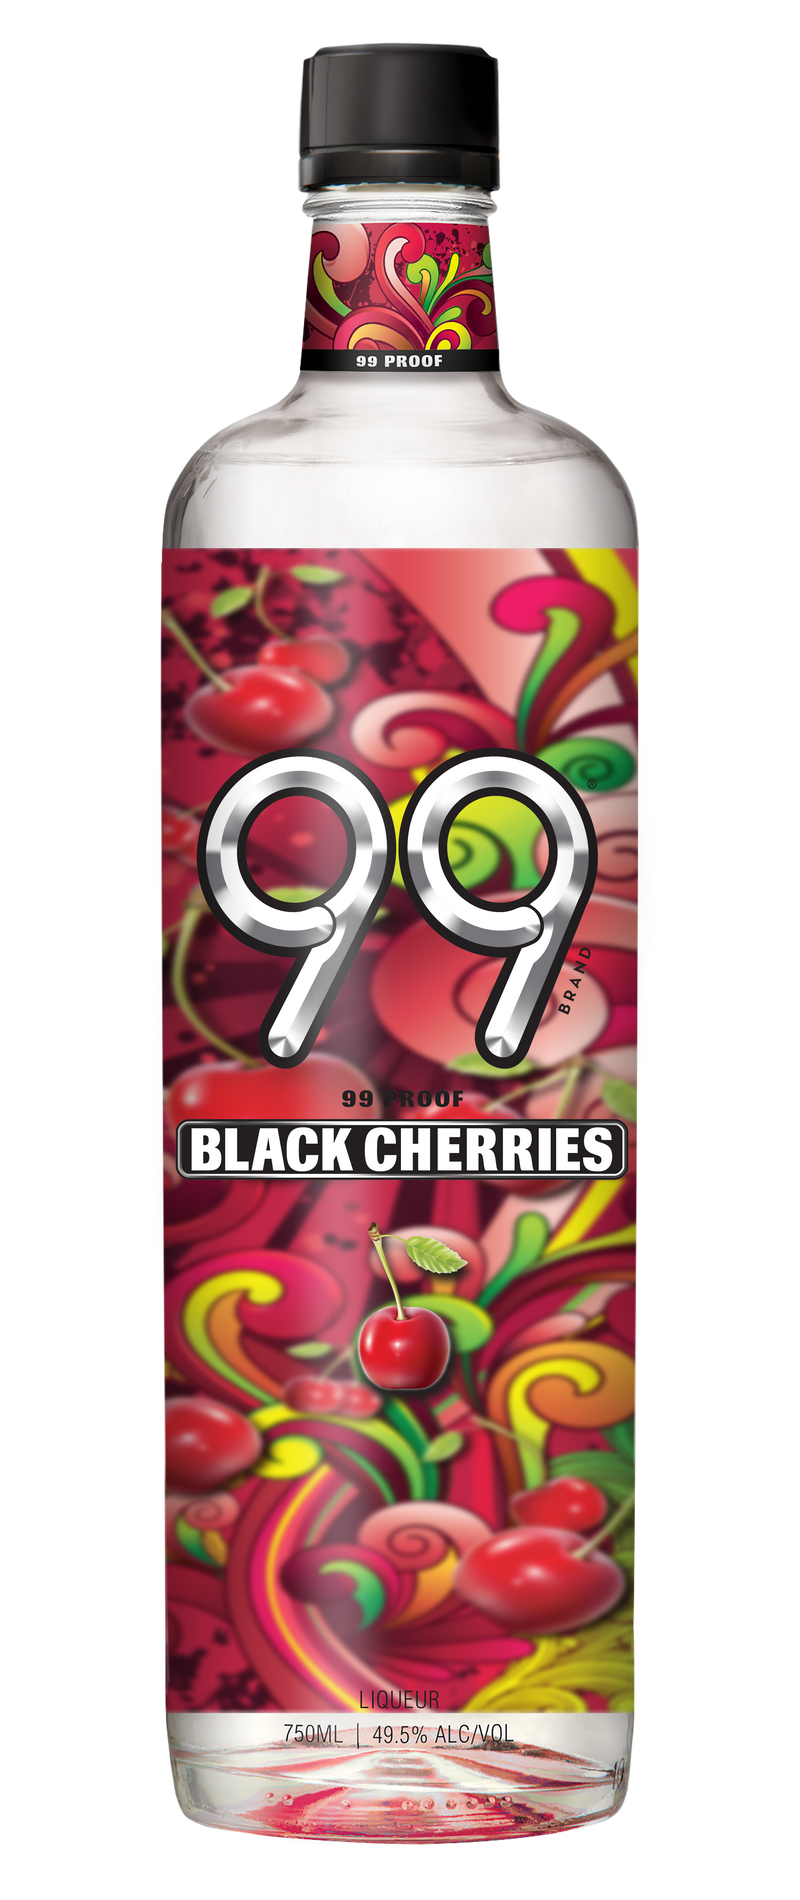 99 BLACK CHERRIES